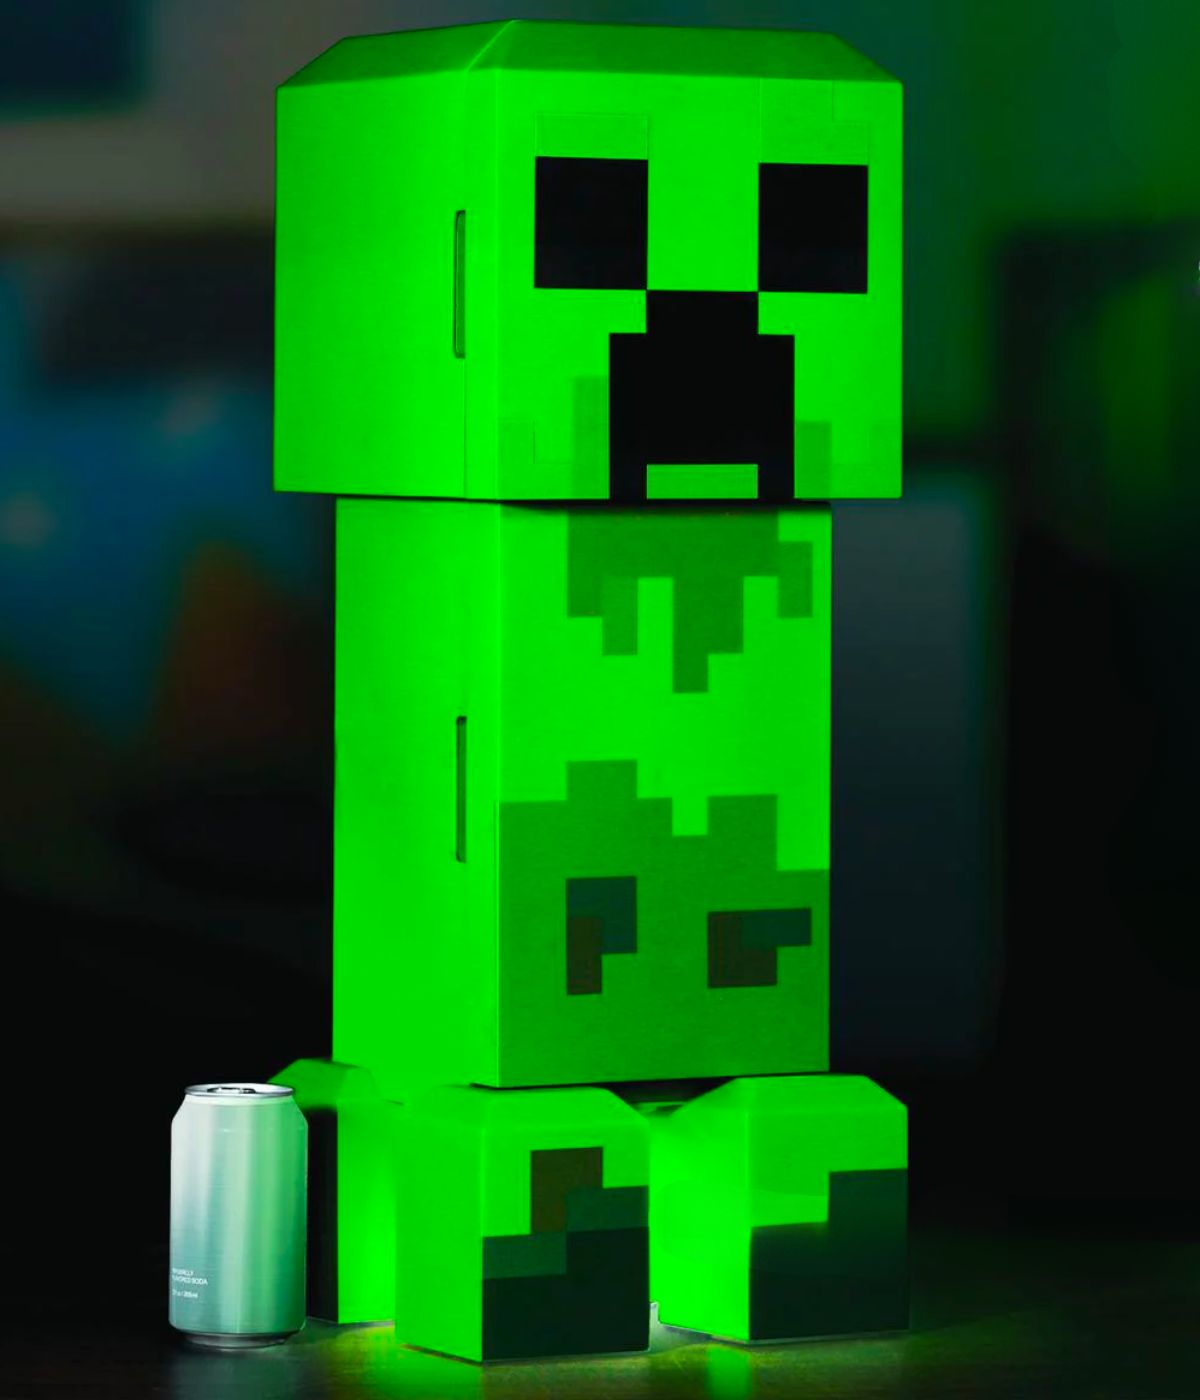 Minecraft Green Creeper Body 12 Can Mini Fridge